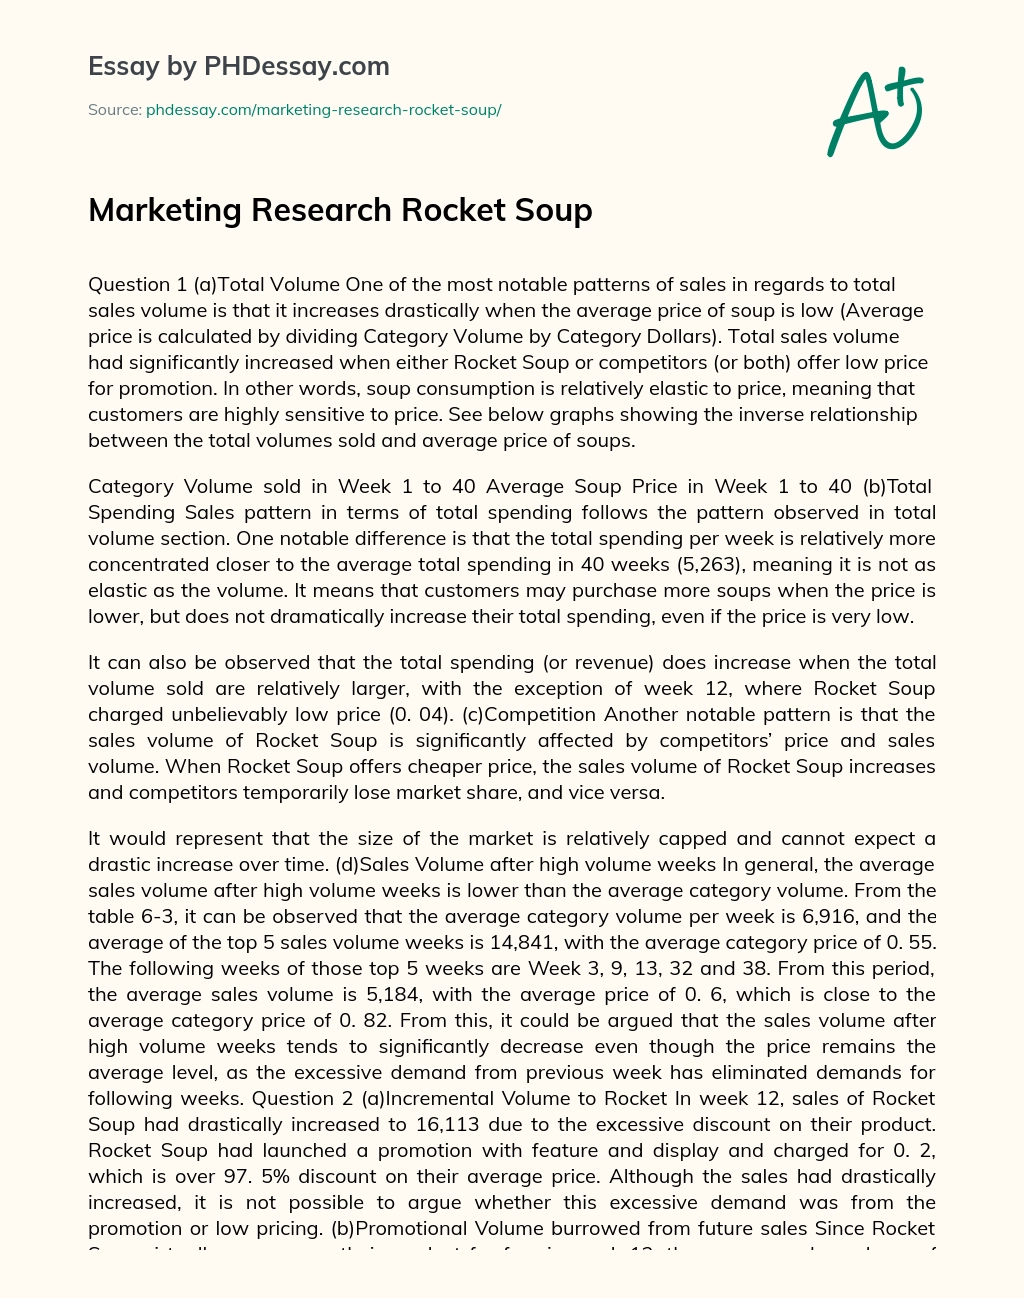 Marketing Research Rocket Soup essay